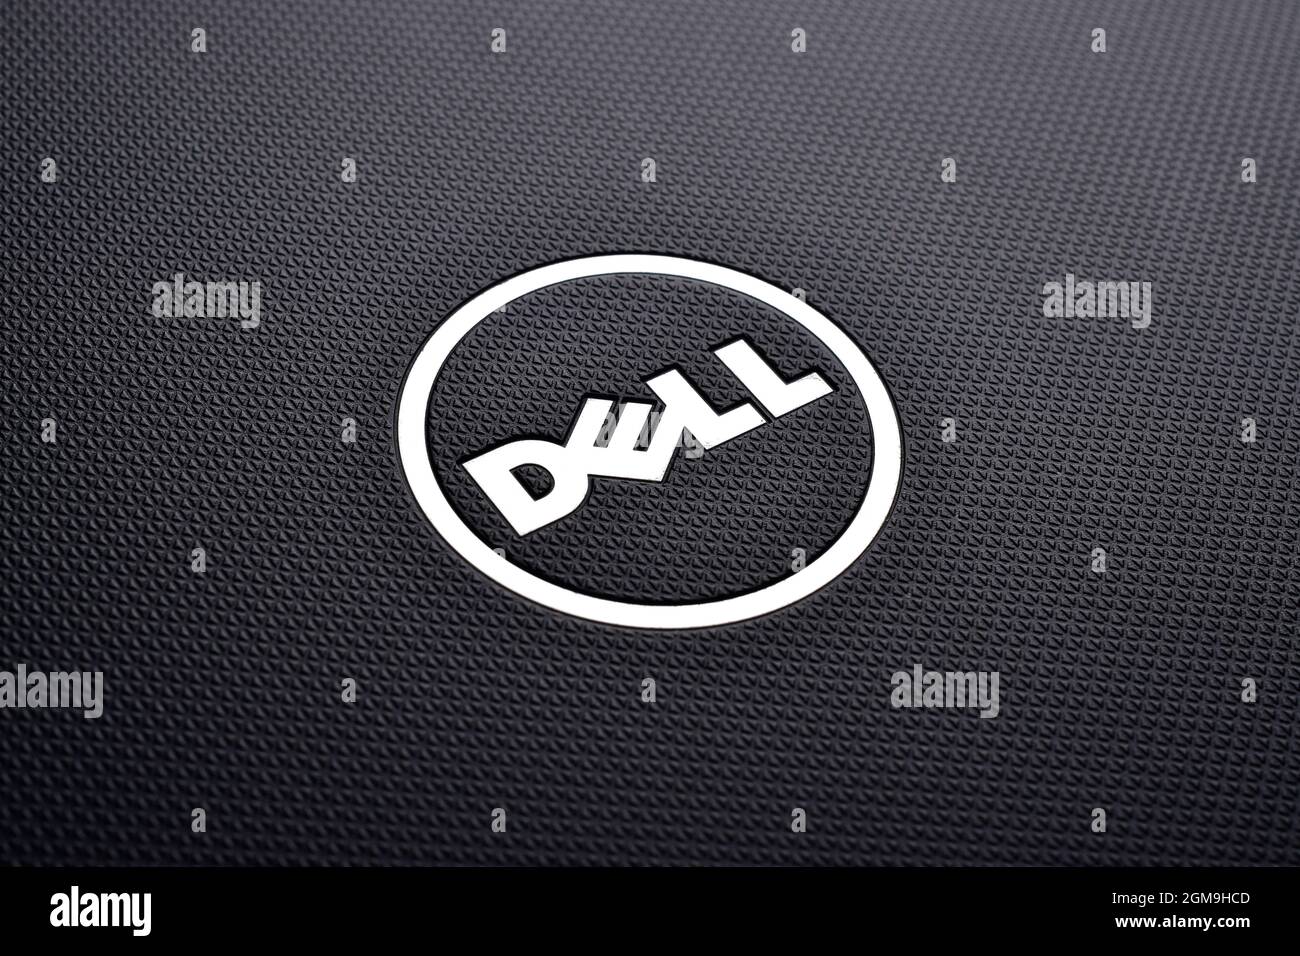 INDIA, DELHI - february 12, 2019: Dell logo on textured black laptop, close up Stock Photo